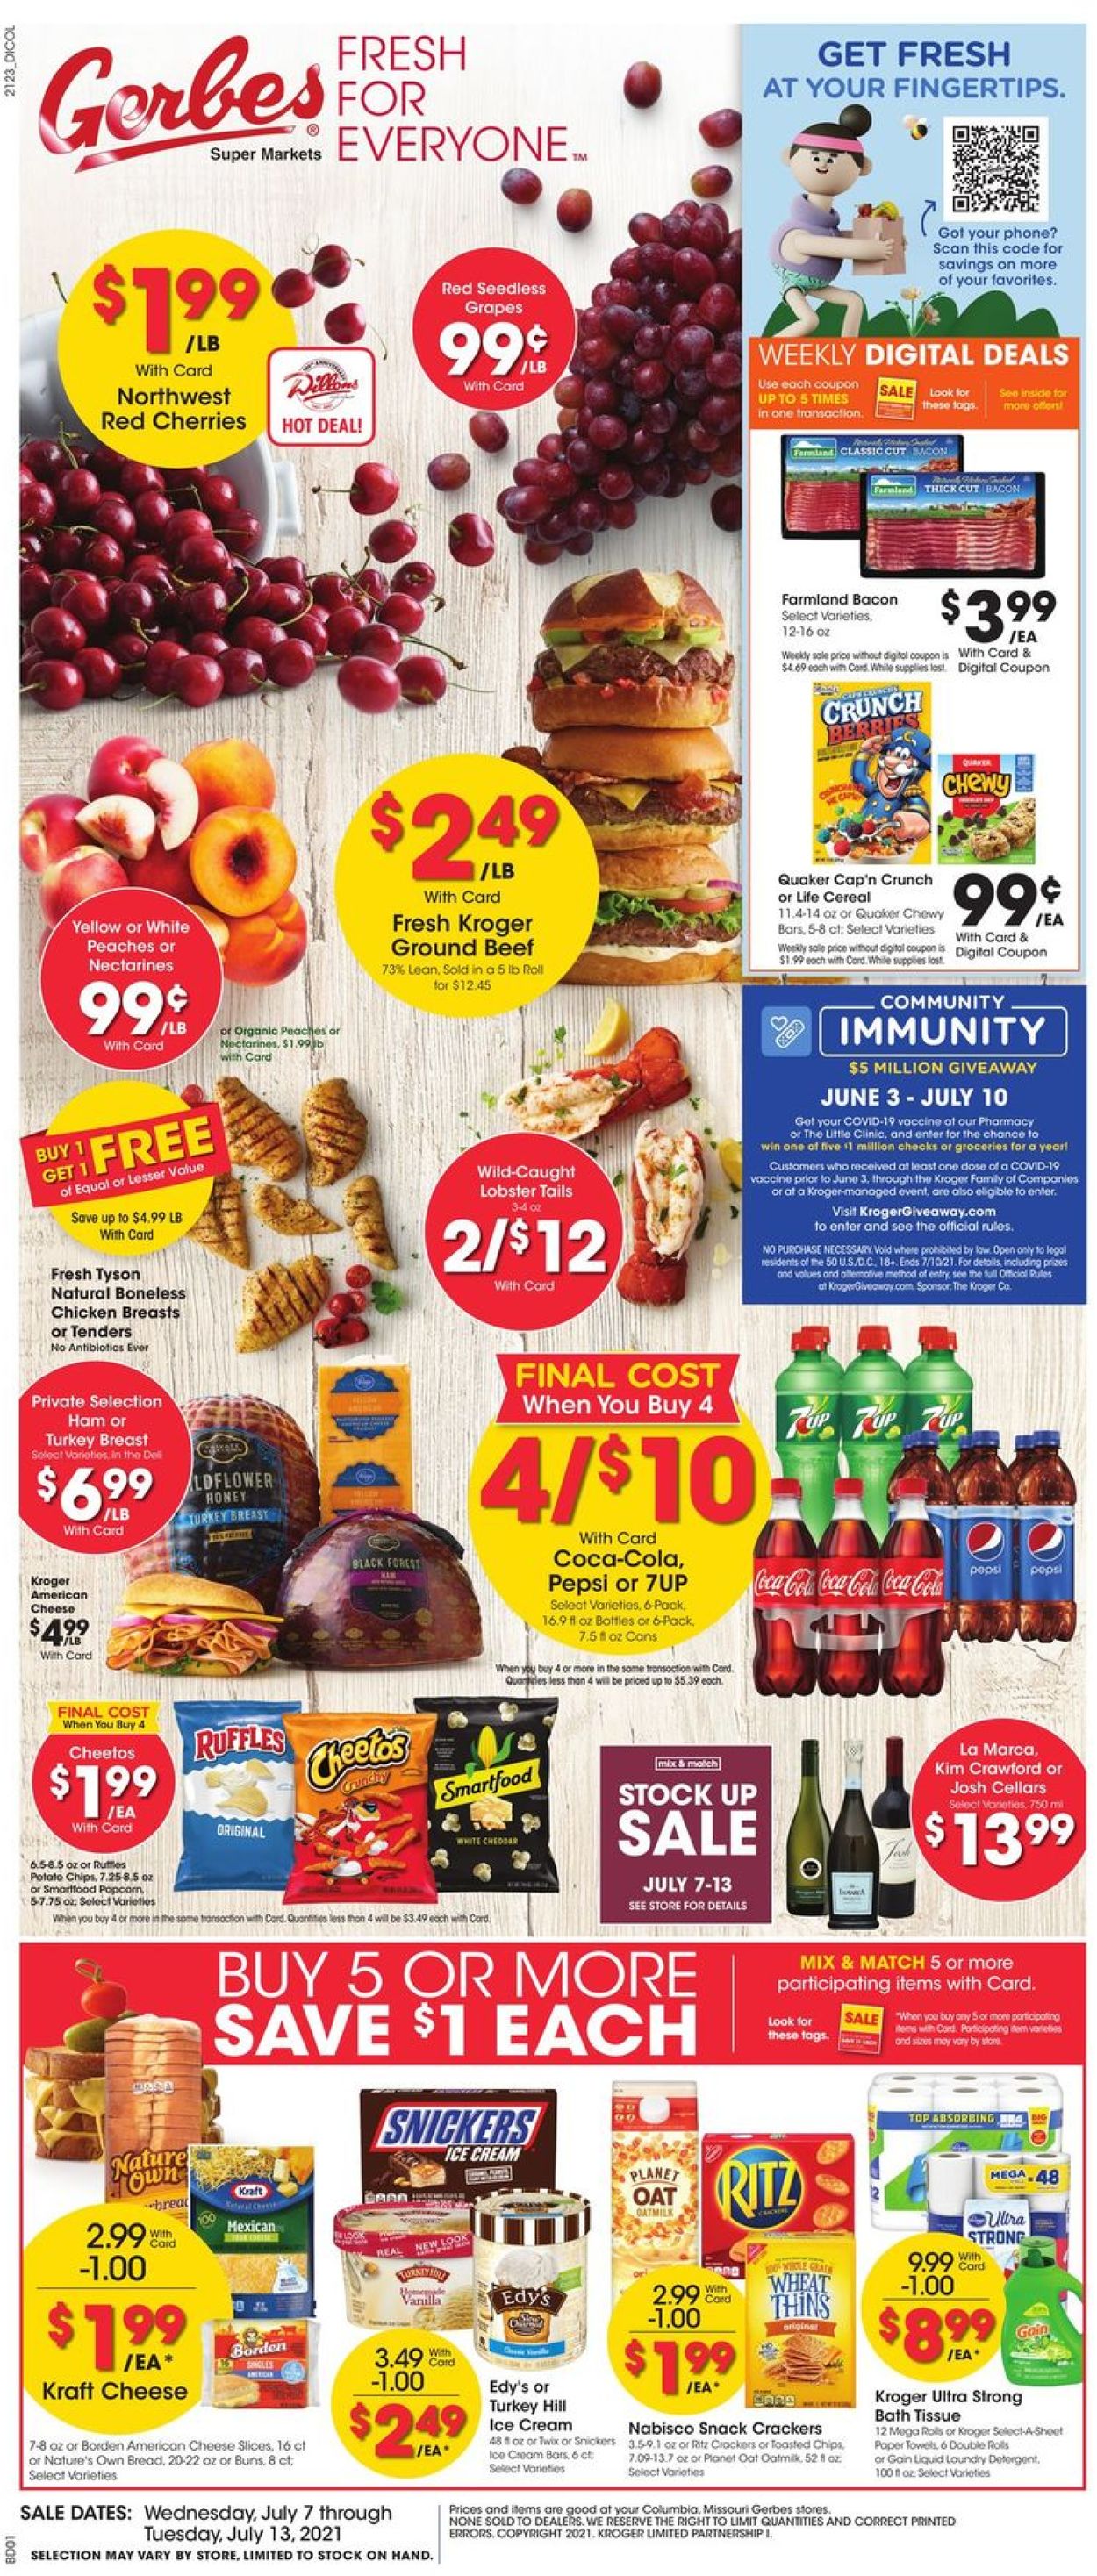 Gerbes Super Markets Ad from 07/07/2021